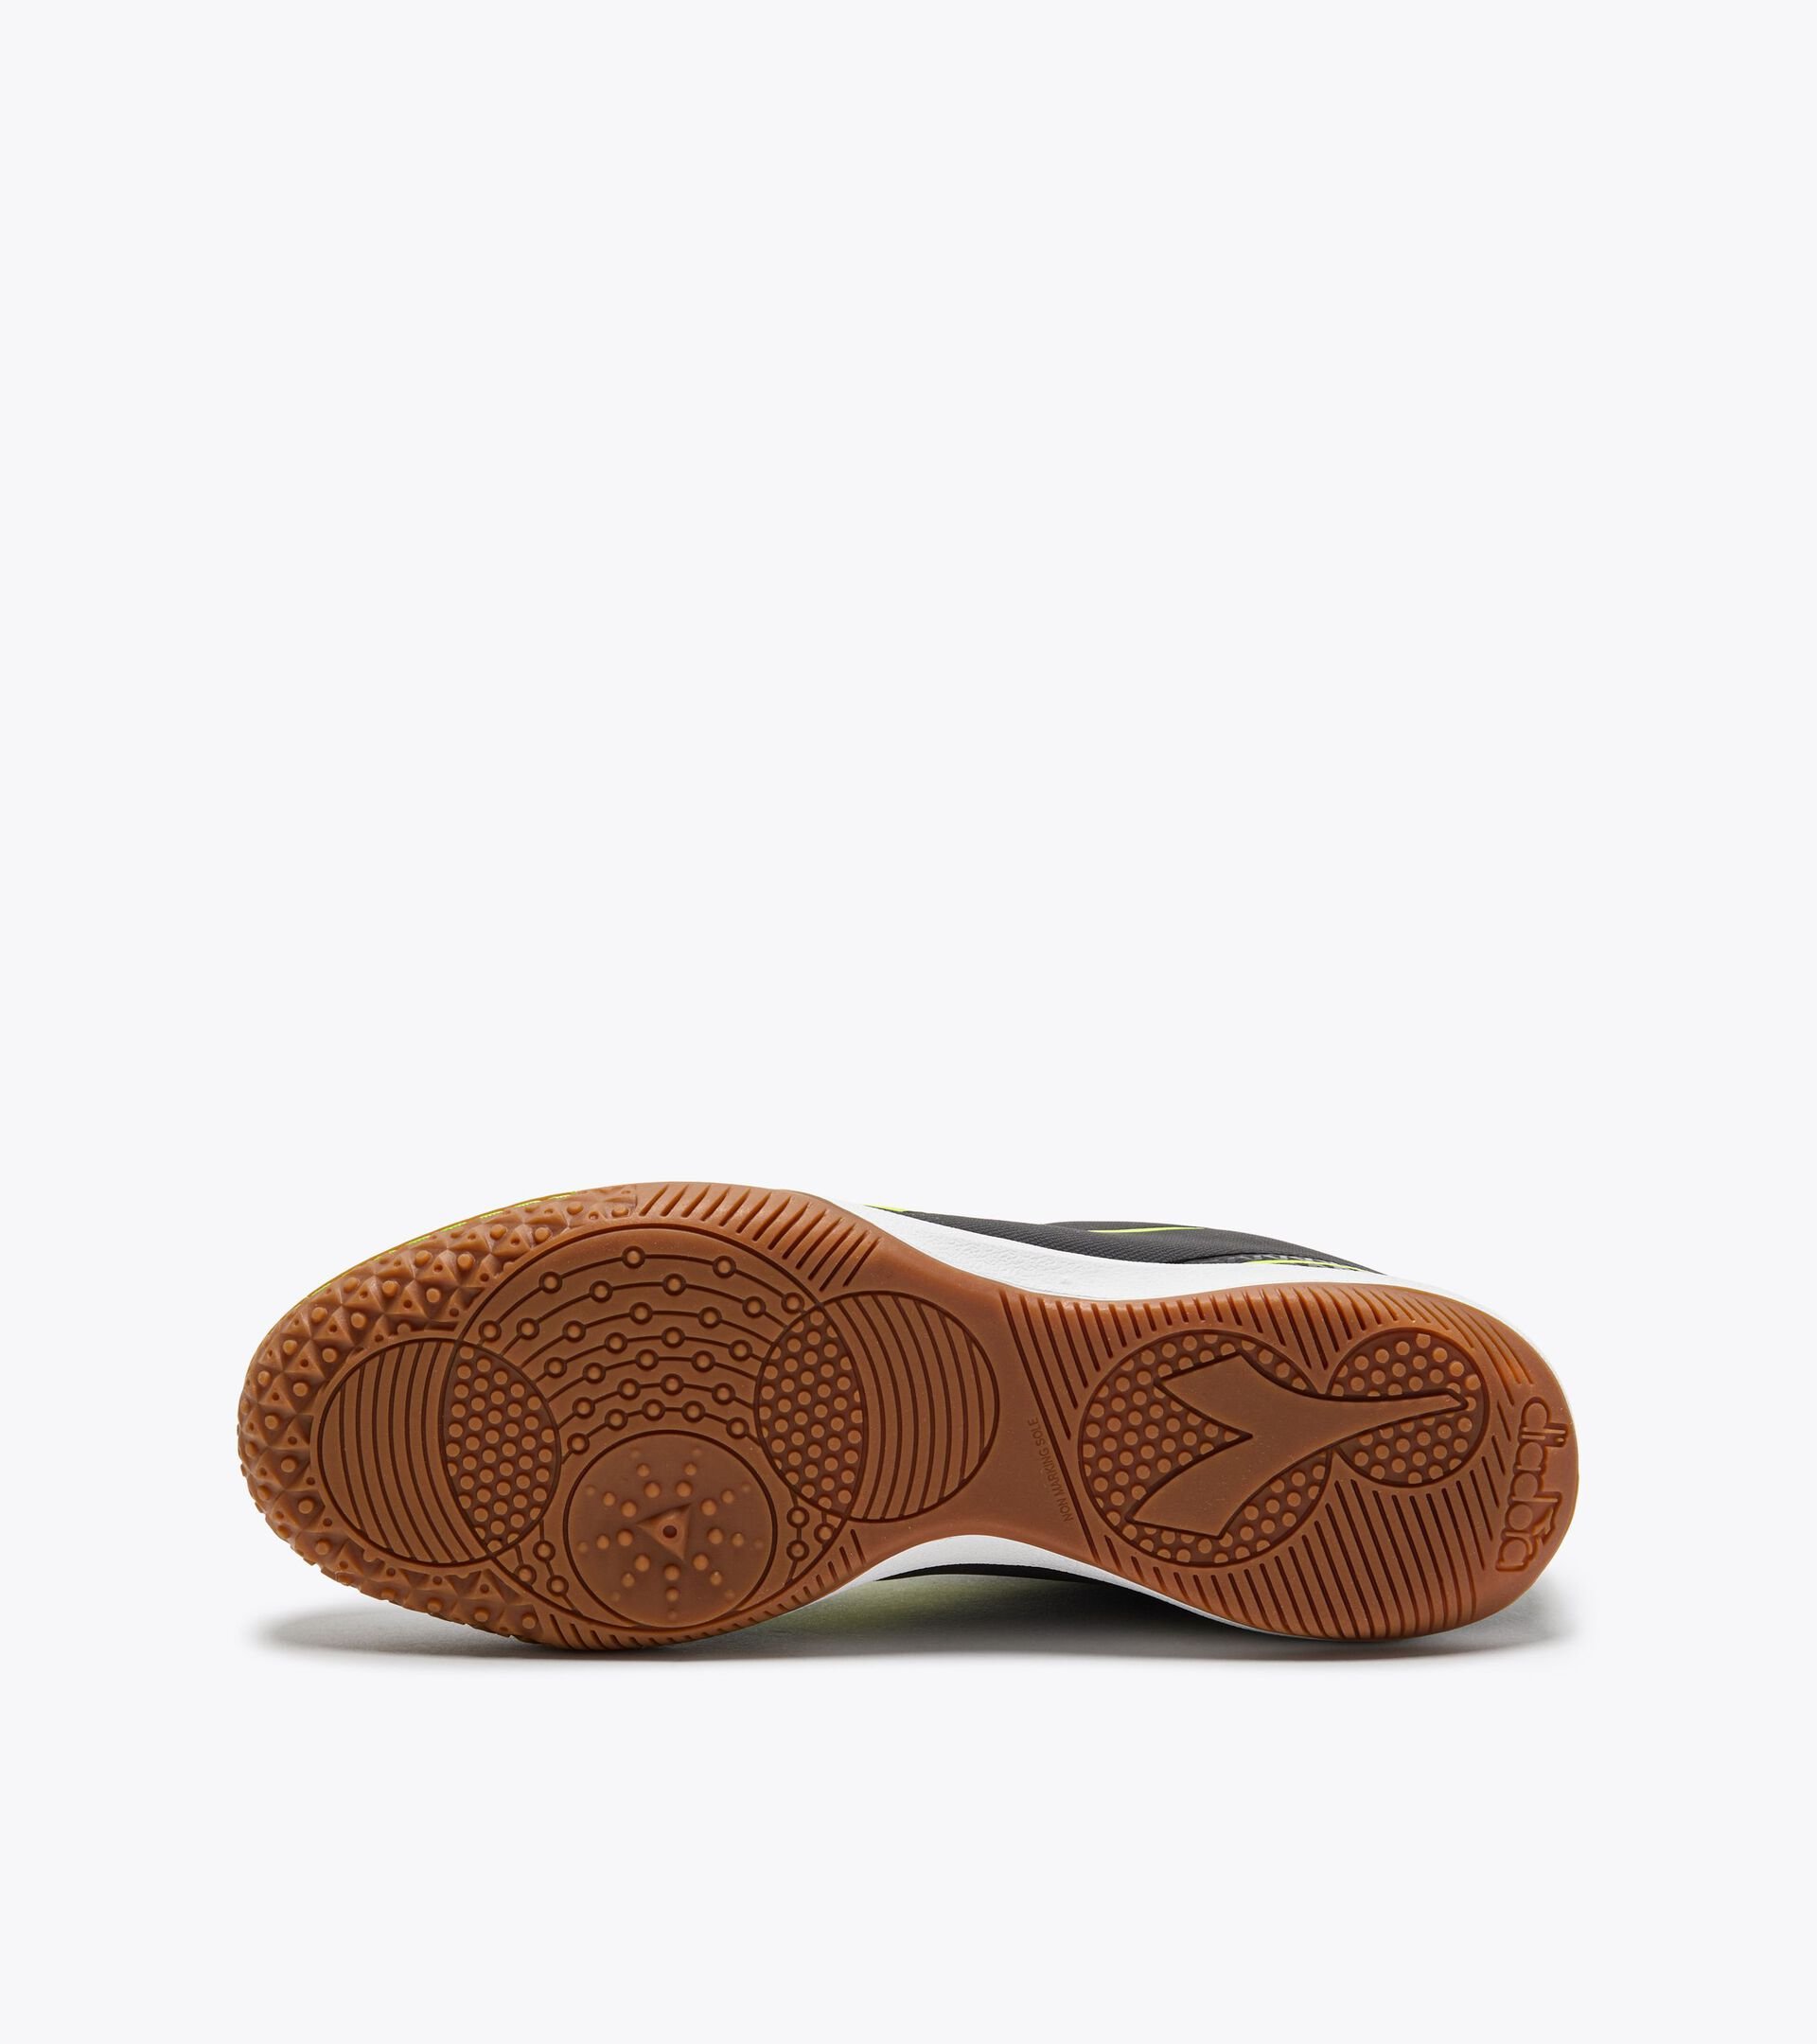 Chaussures de futsal - Homme PICHICHI 6 IDR NERO/GIALLO FL DD/BIANCO OTTIC - Diadora